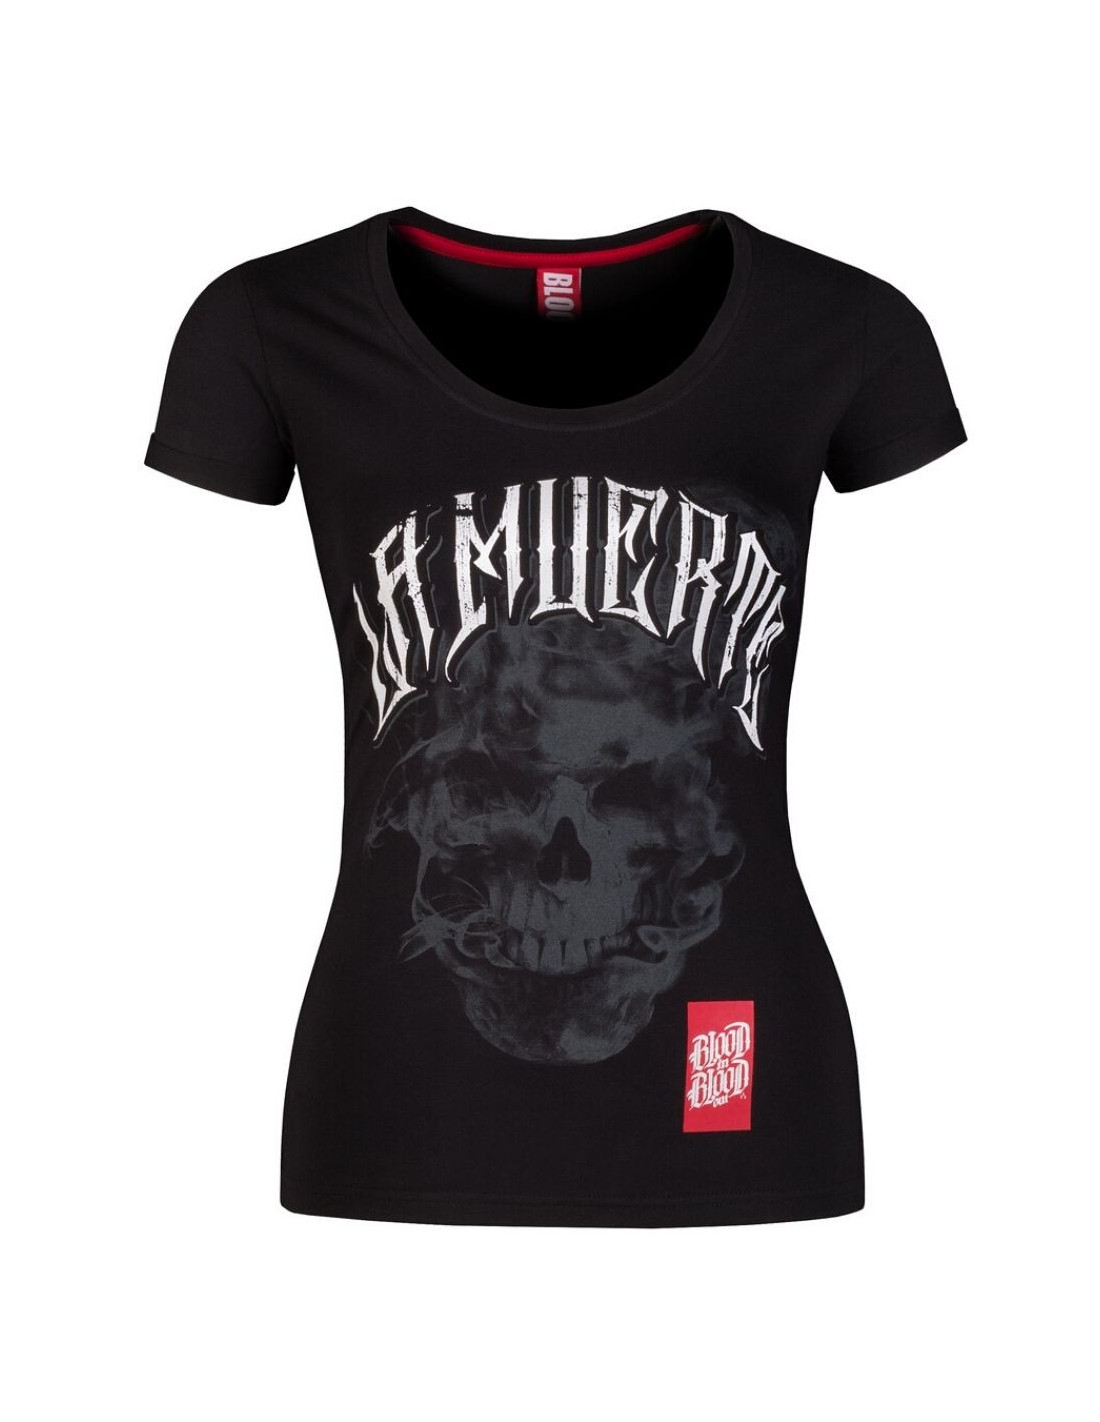 La Muerte T-Shirt Black by Blood In Blood Out